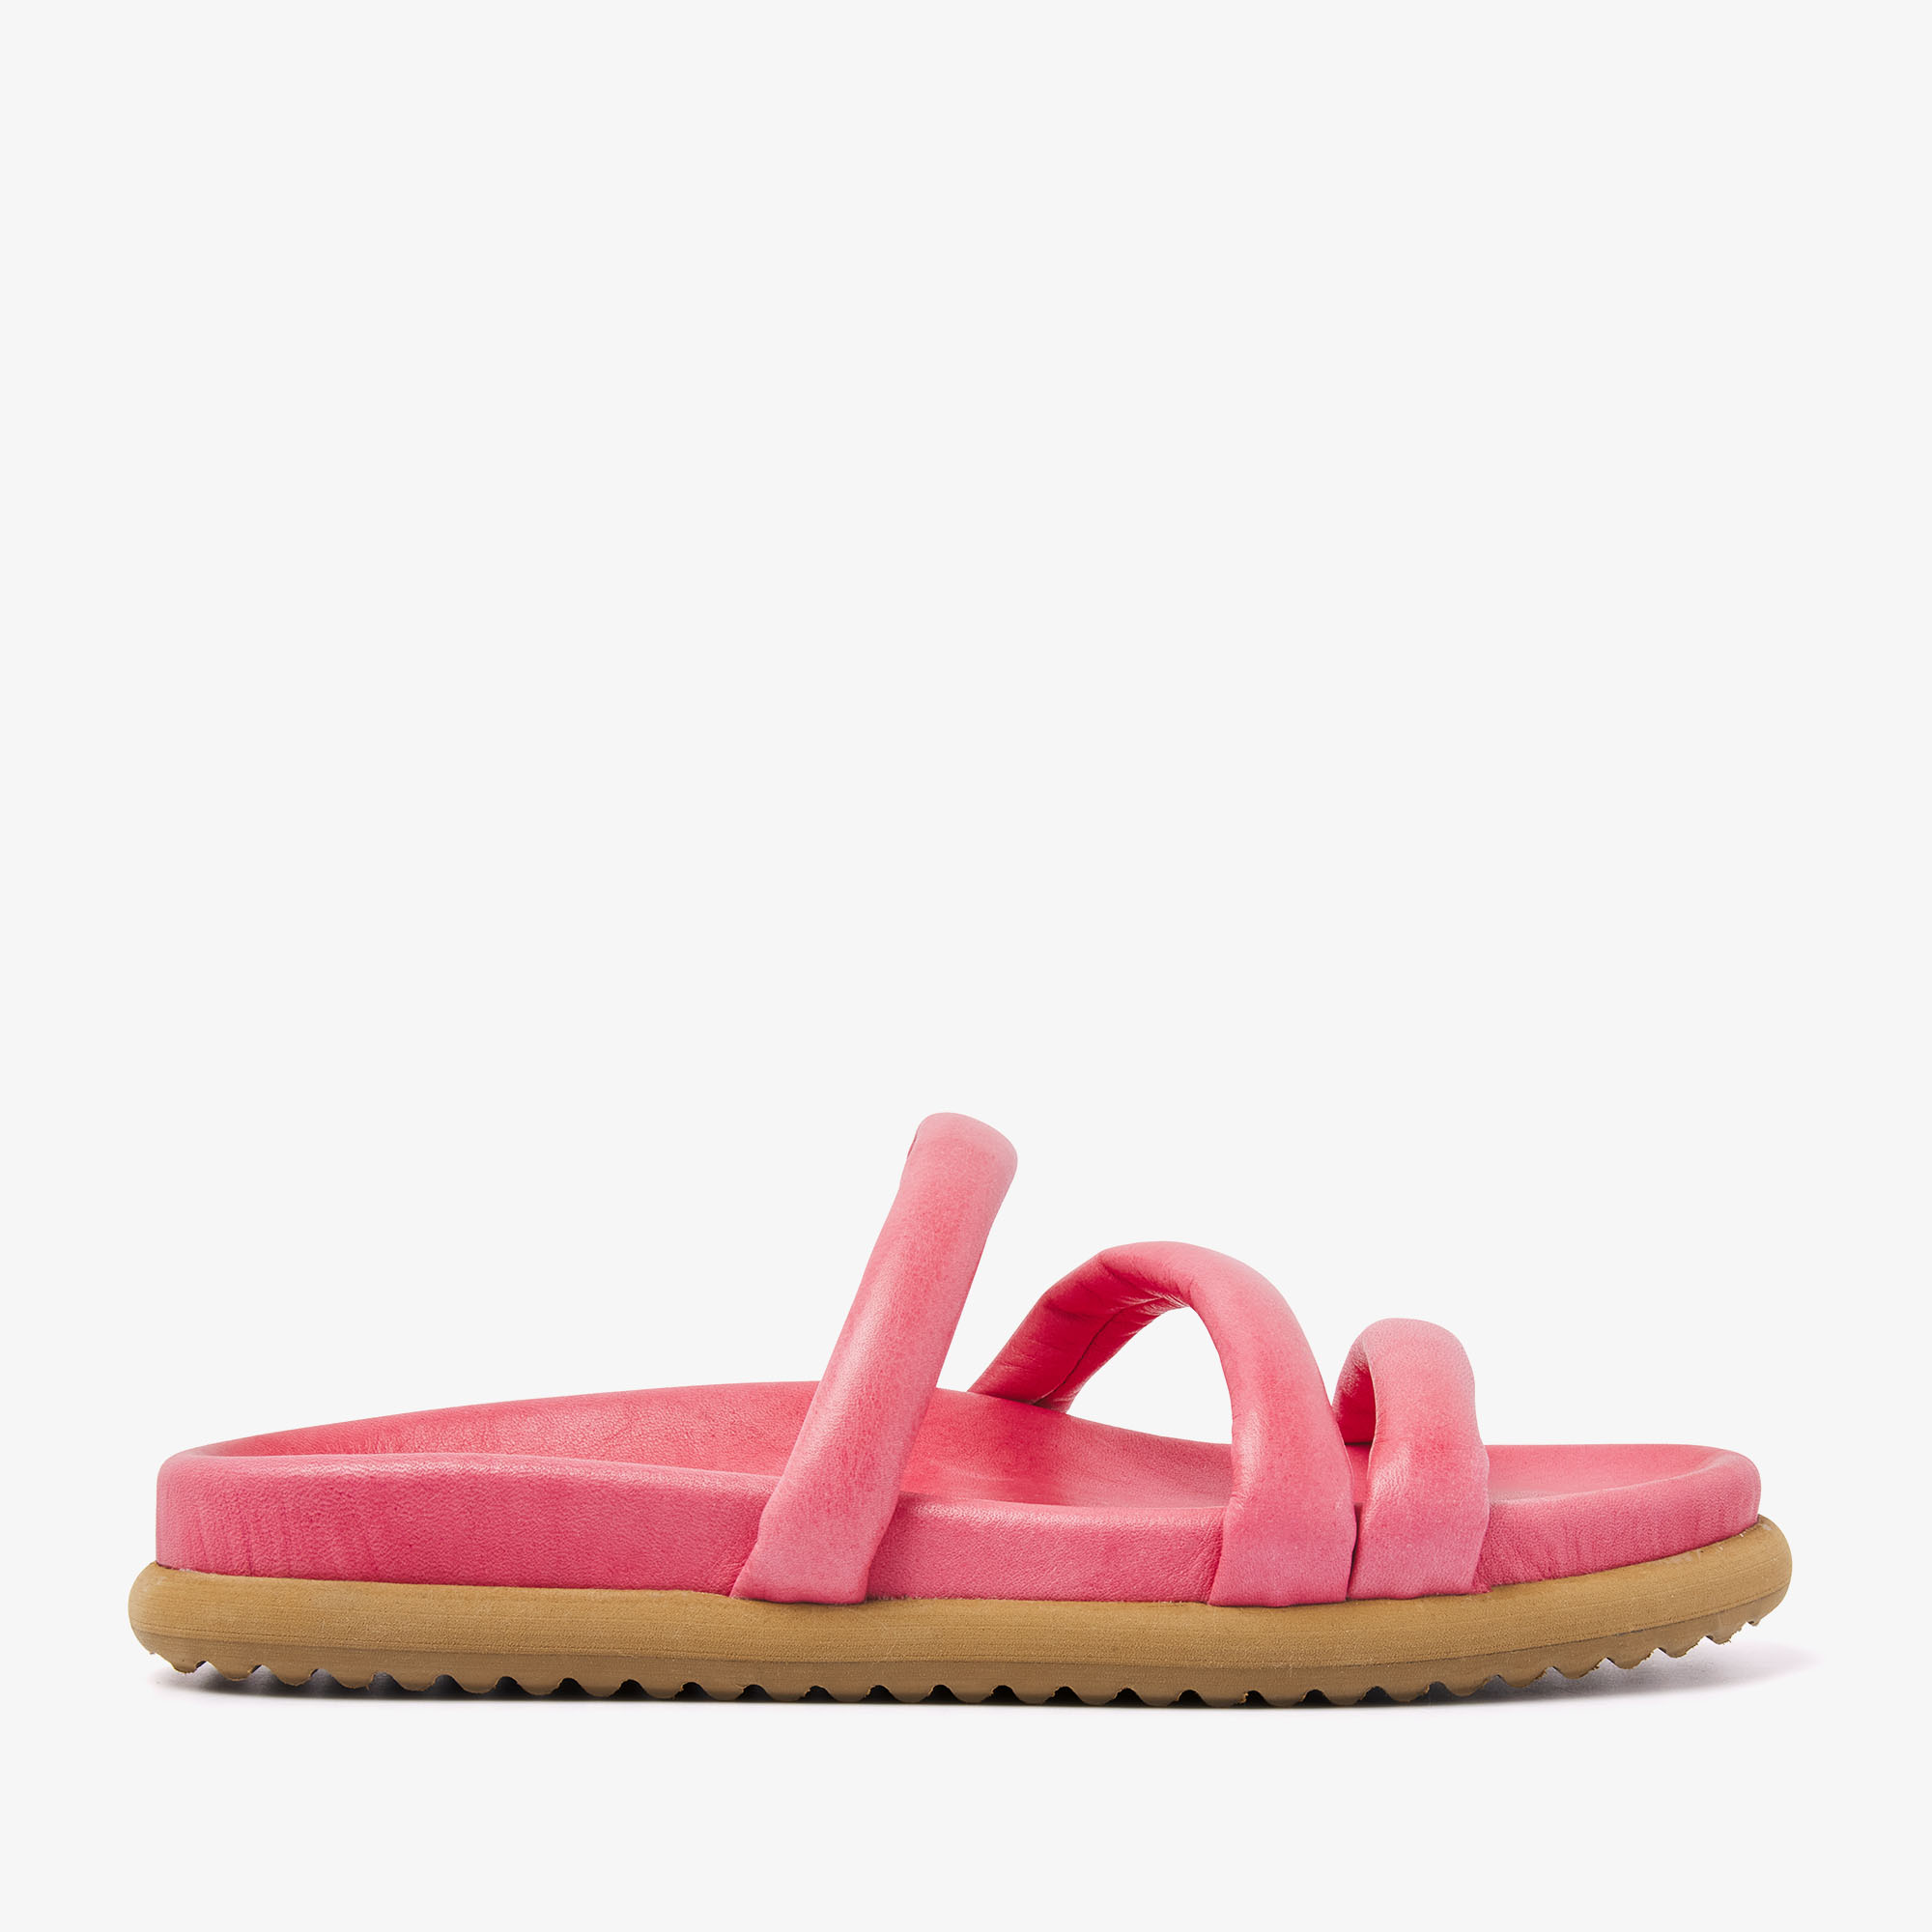 VIA VAI Candy Pop lyserøde slippers